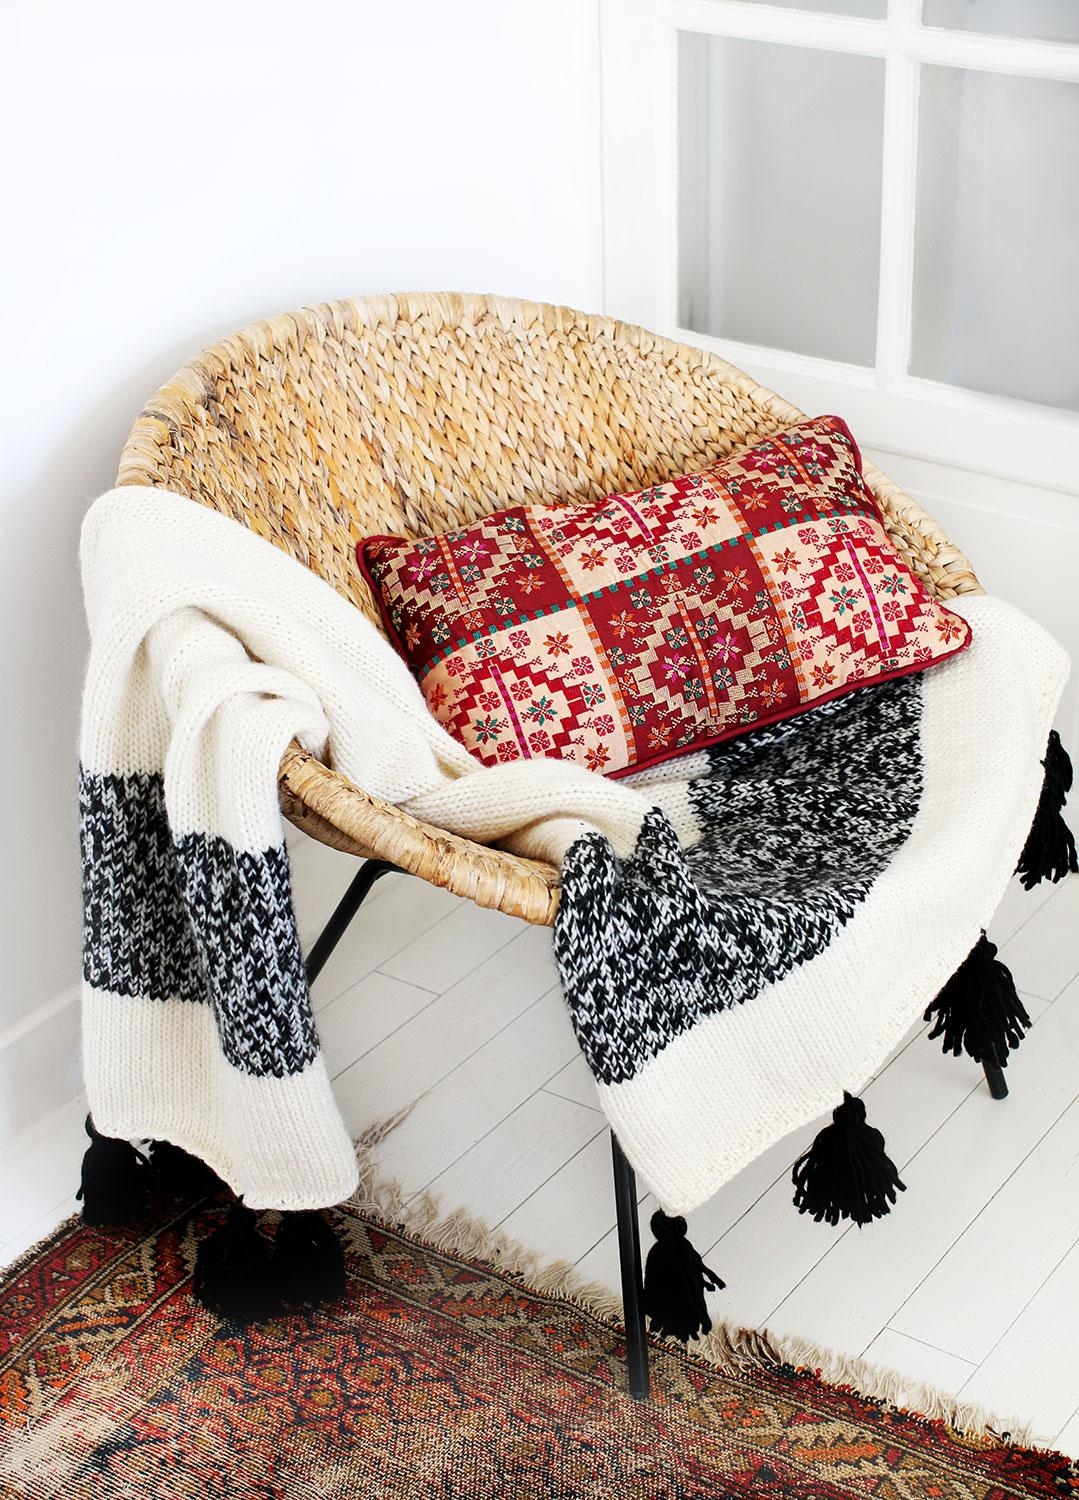 Lieblingsdecke 😍 The Kilim Blanket by @WeAreKnitters
#stricksets #stricken #diy